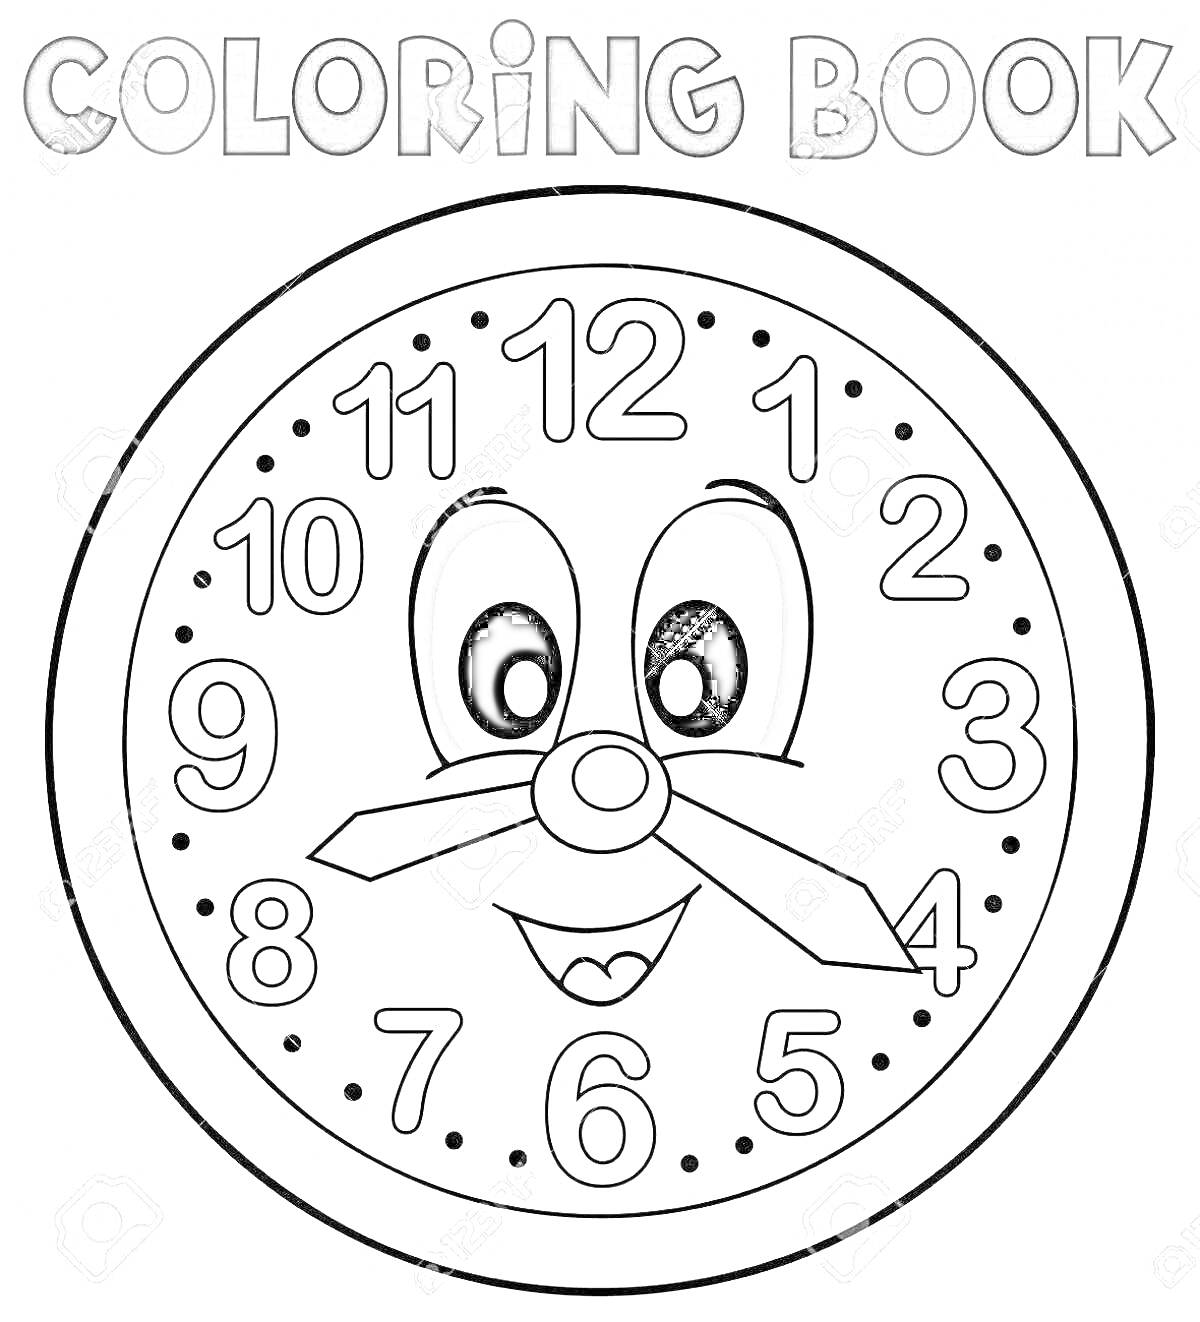 На раскраске изображено: Часы, Циферблат, Глаза, Нос, Рот, Веселое лицо, Цифры, Стрелки